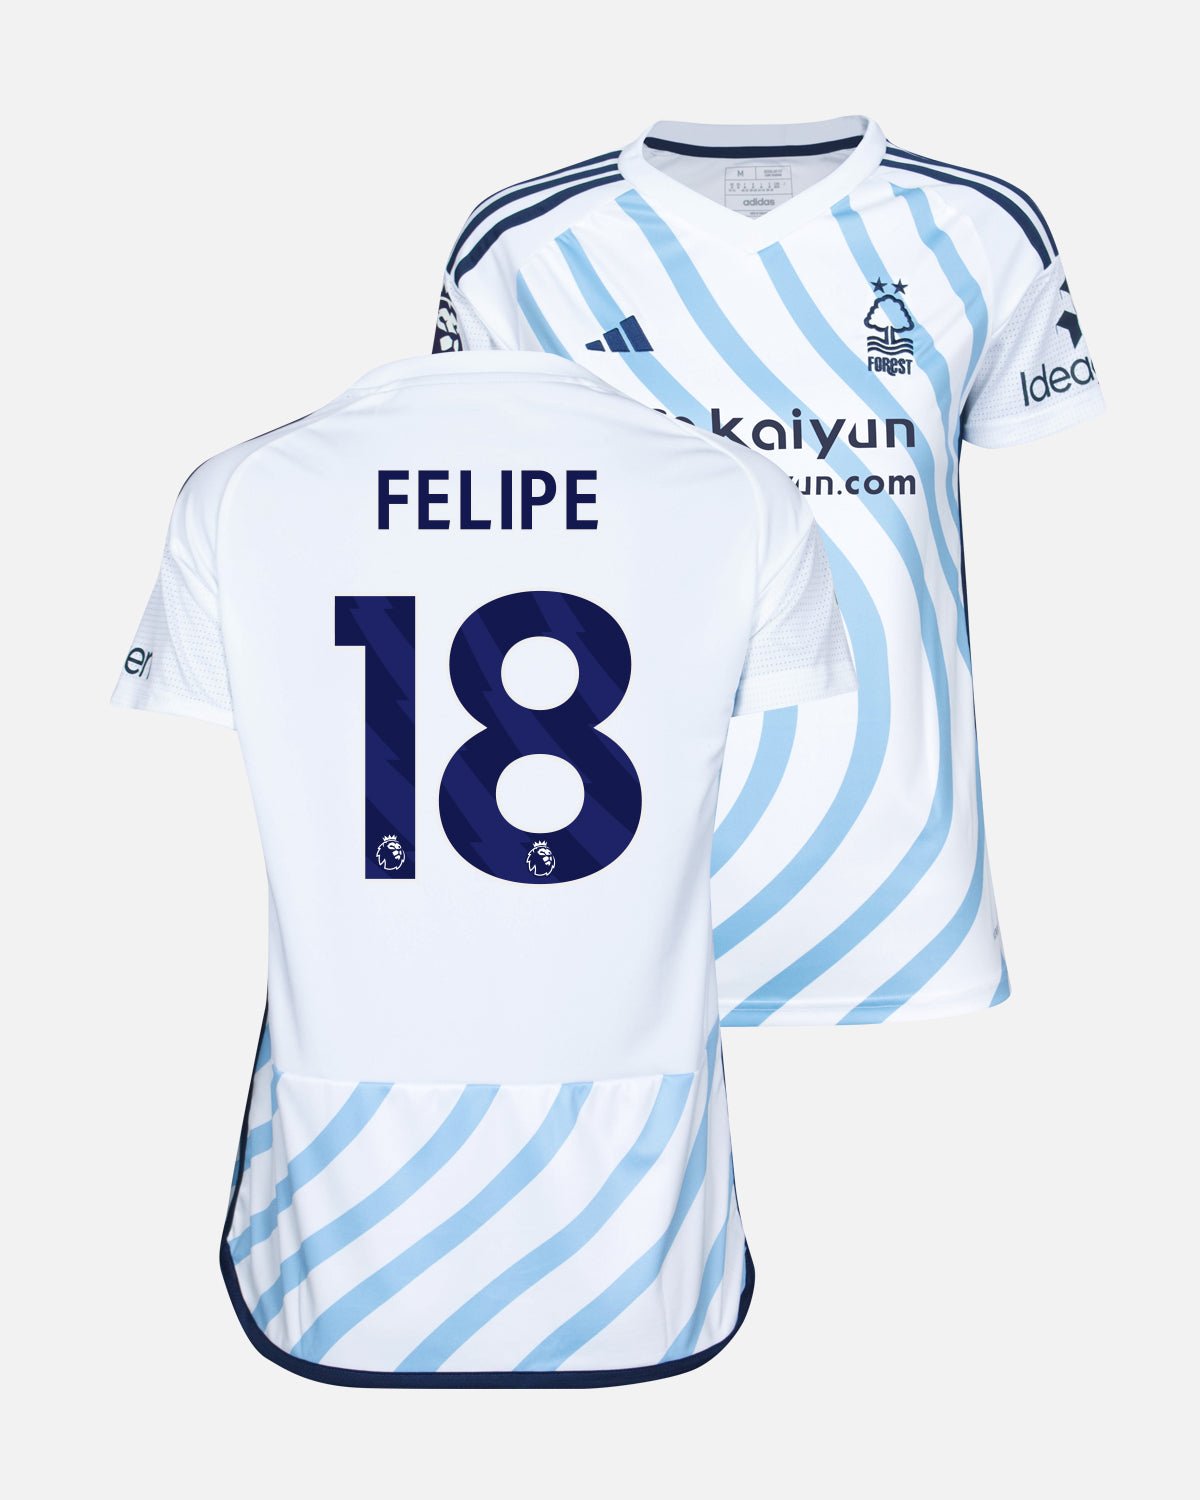 NFFC Women's Away Shirt 23-24 - Felipe 18 - Nottingham Forest FC